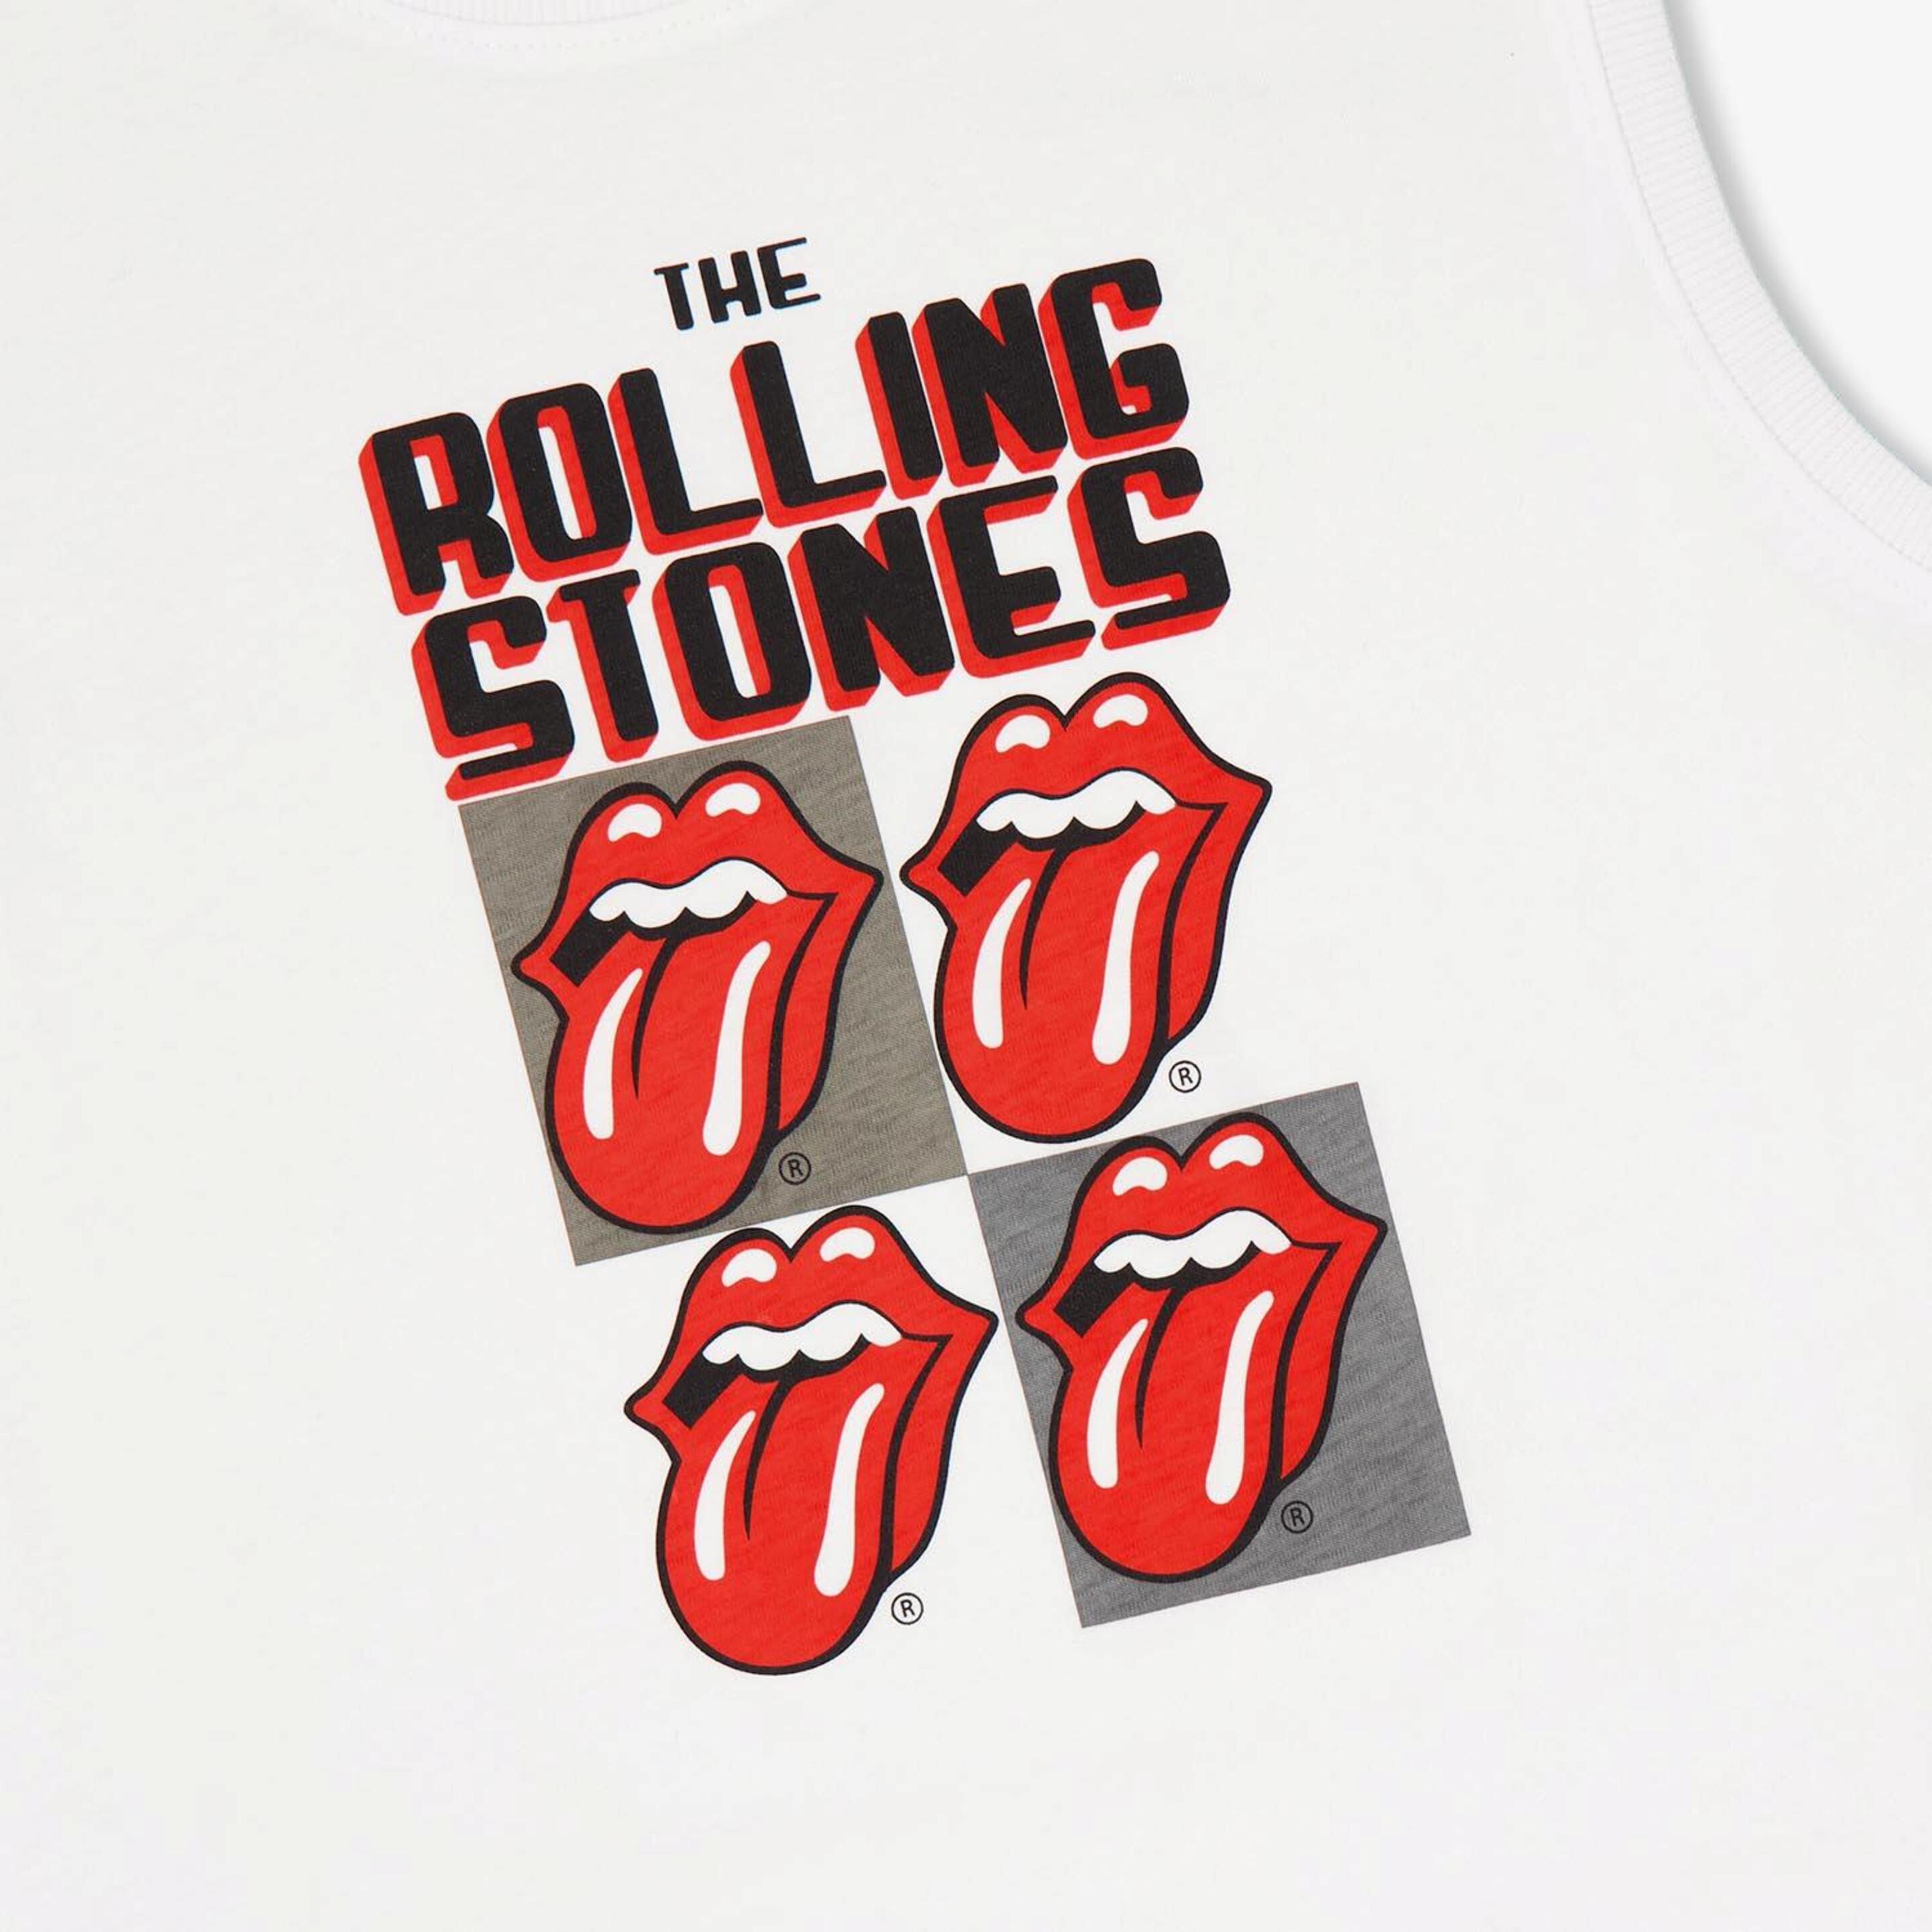 Camisola Rolling Stones